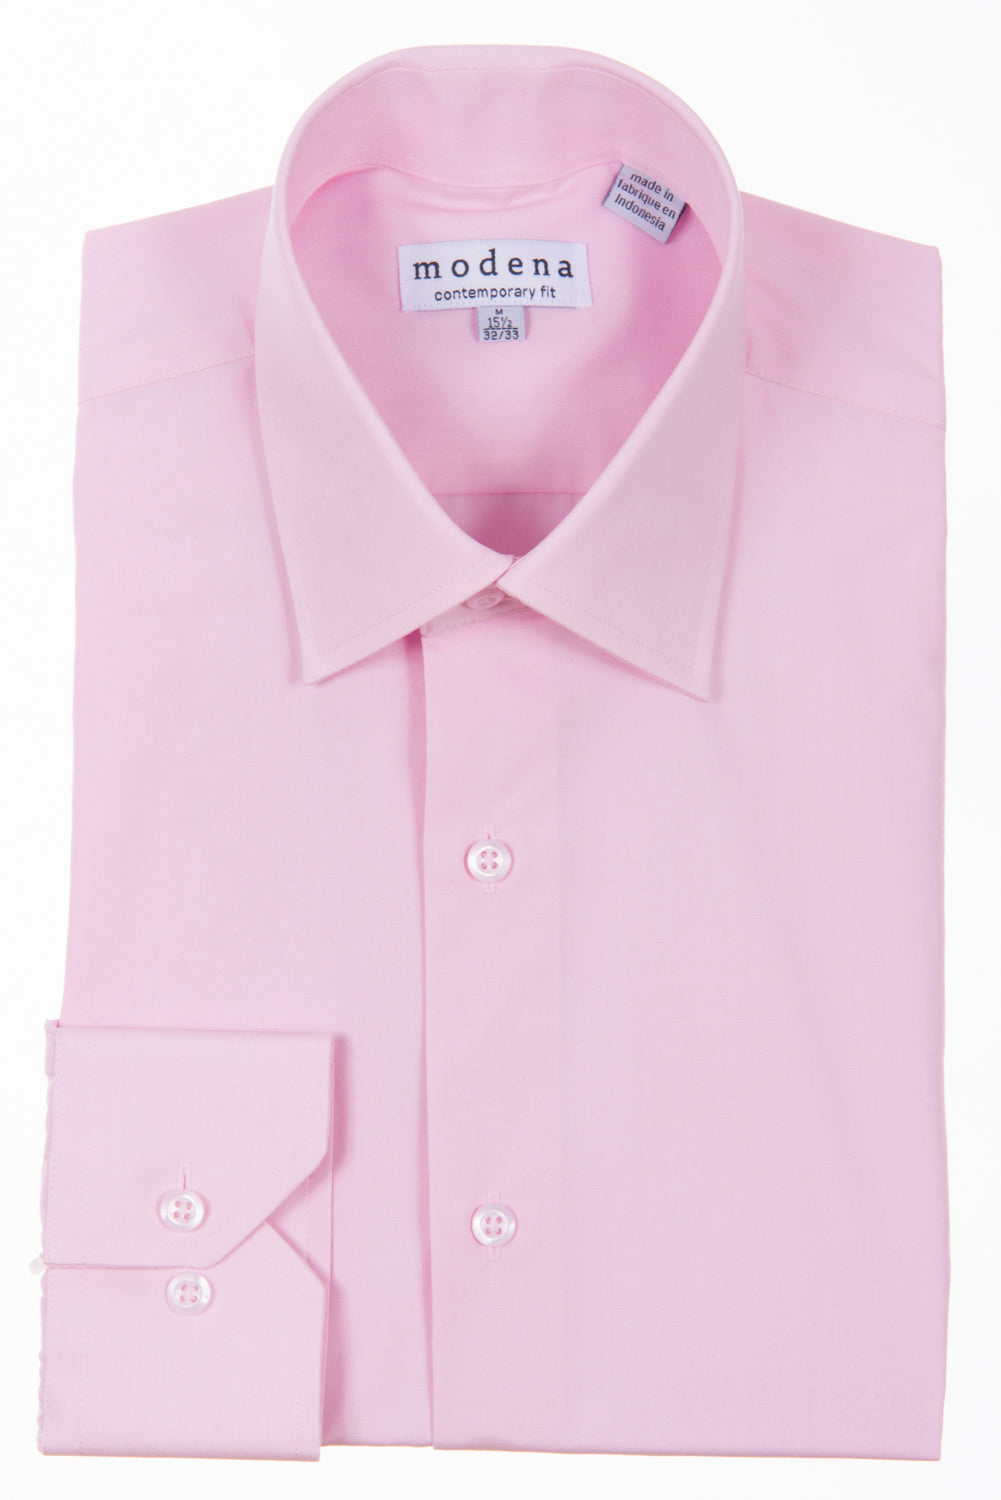 Modena - Pink - Solid - Cotton Blend - Dress Shirt - Slim Fit